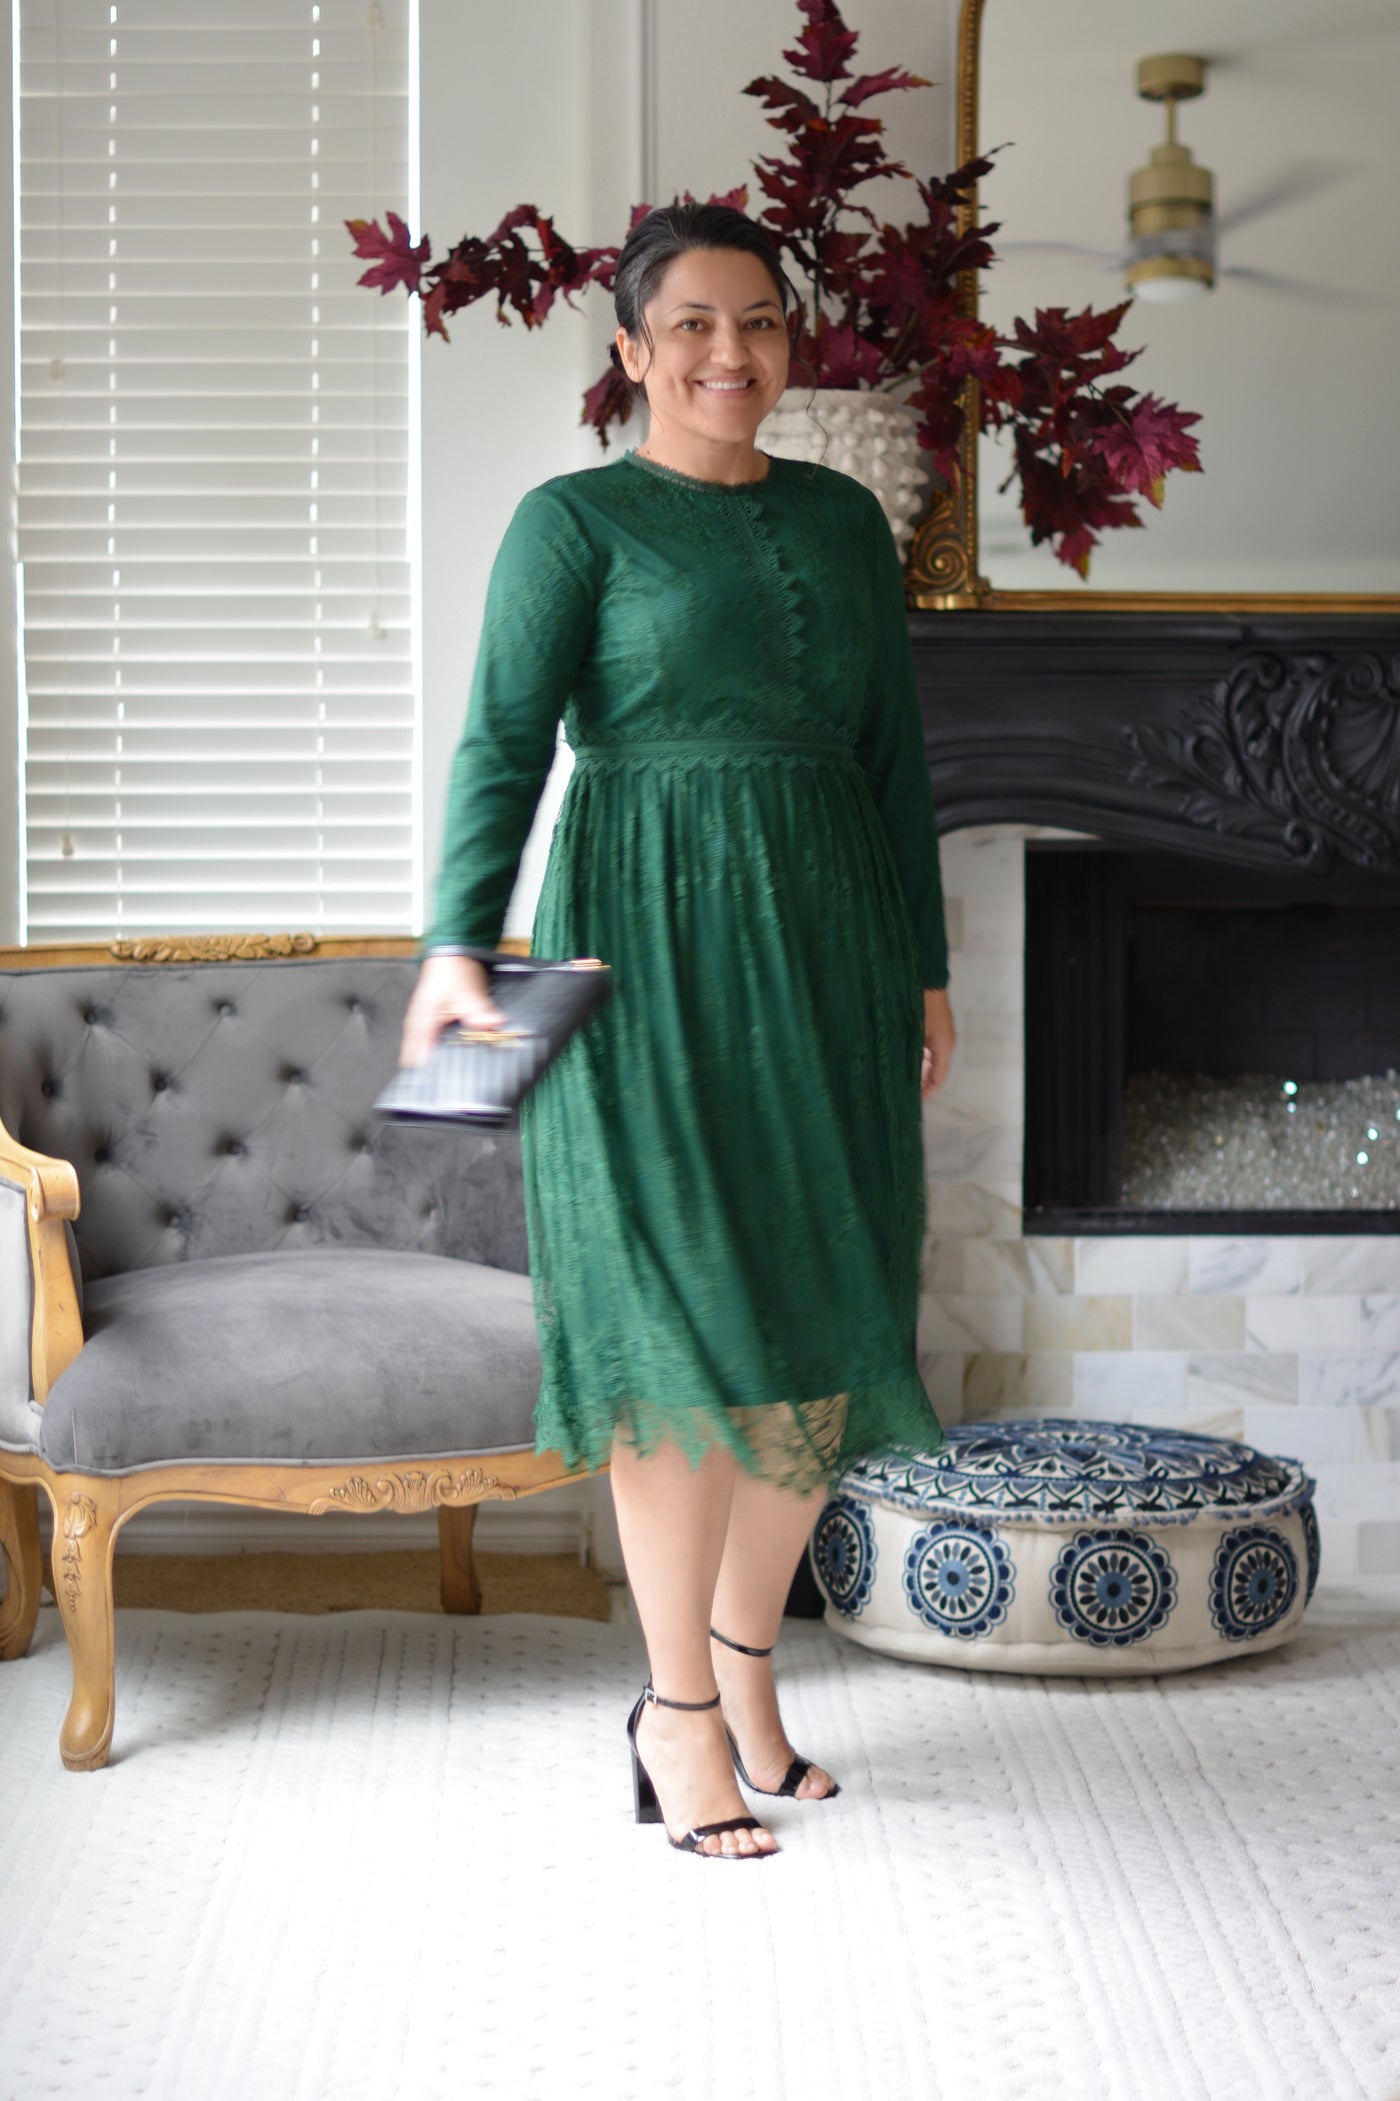 Sydney Emerald Green Lace Dress